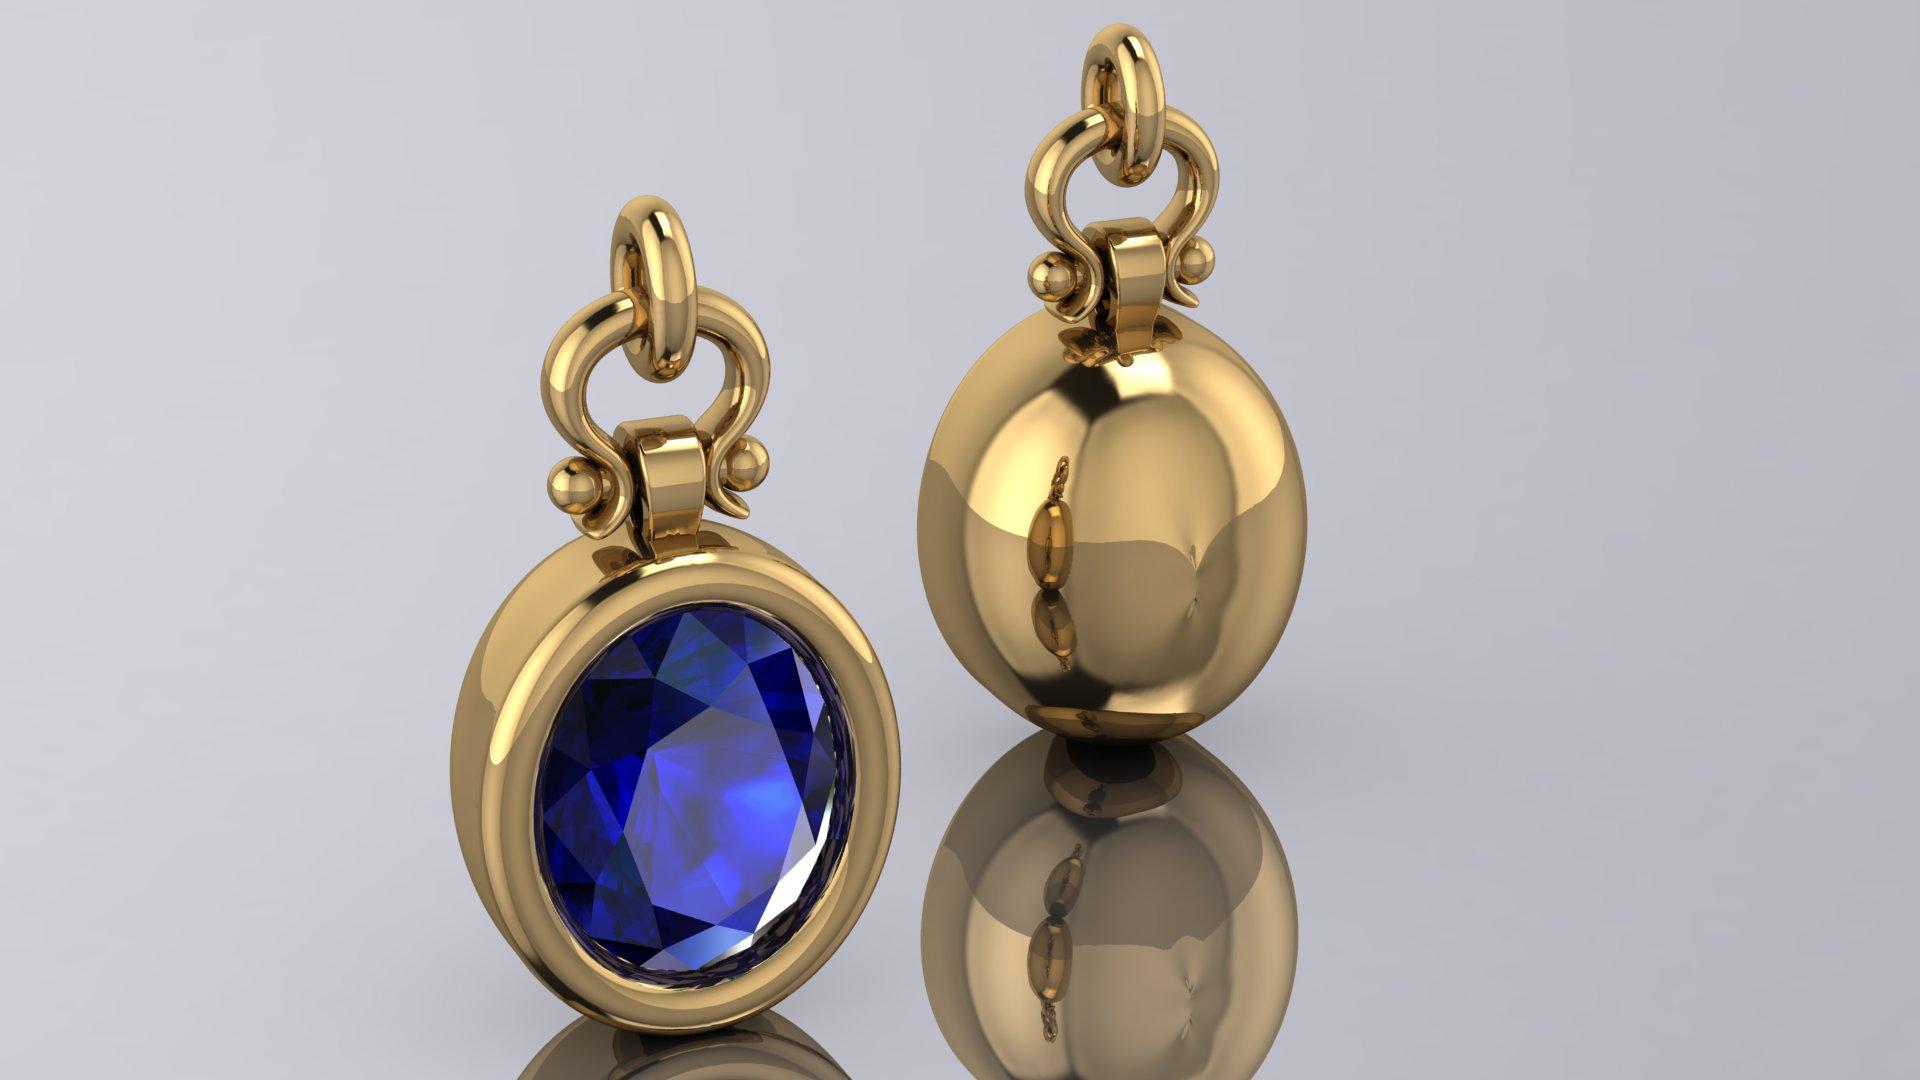 Taille ovale Berberyn Collier pendentif en or 18 carats avec saphir bleu taille ovale certifié 3,01 carats en vente